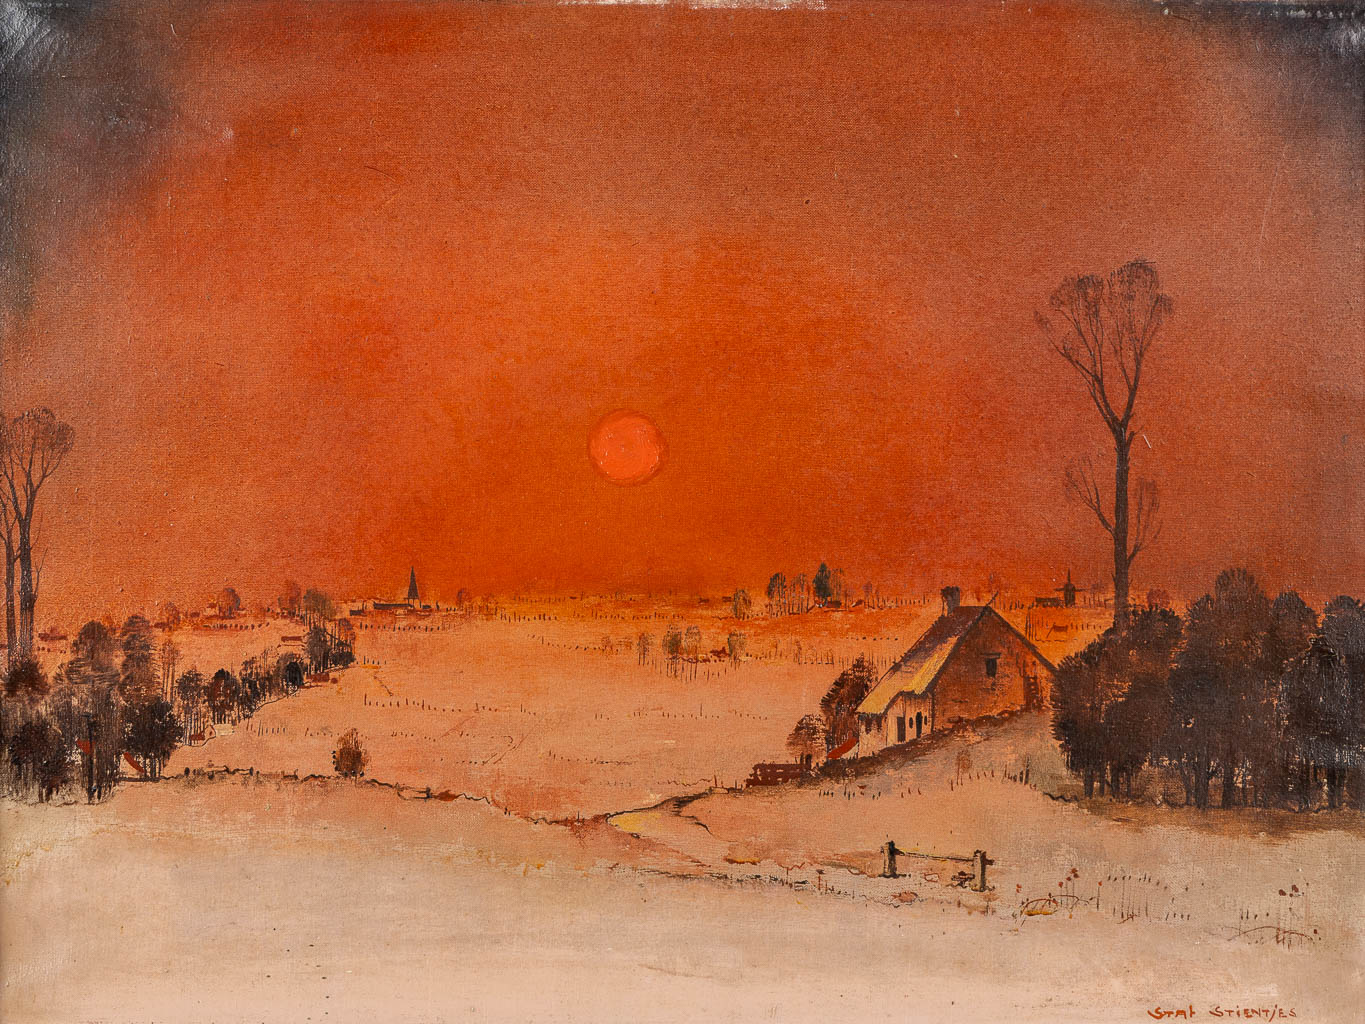 Staf STIENTJES (1883-1974) 'Landscape at dusk' oil on canvas. (W:61 x H:45 cm)